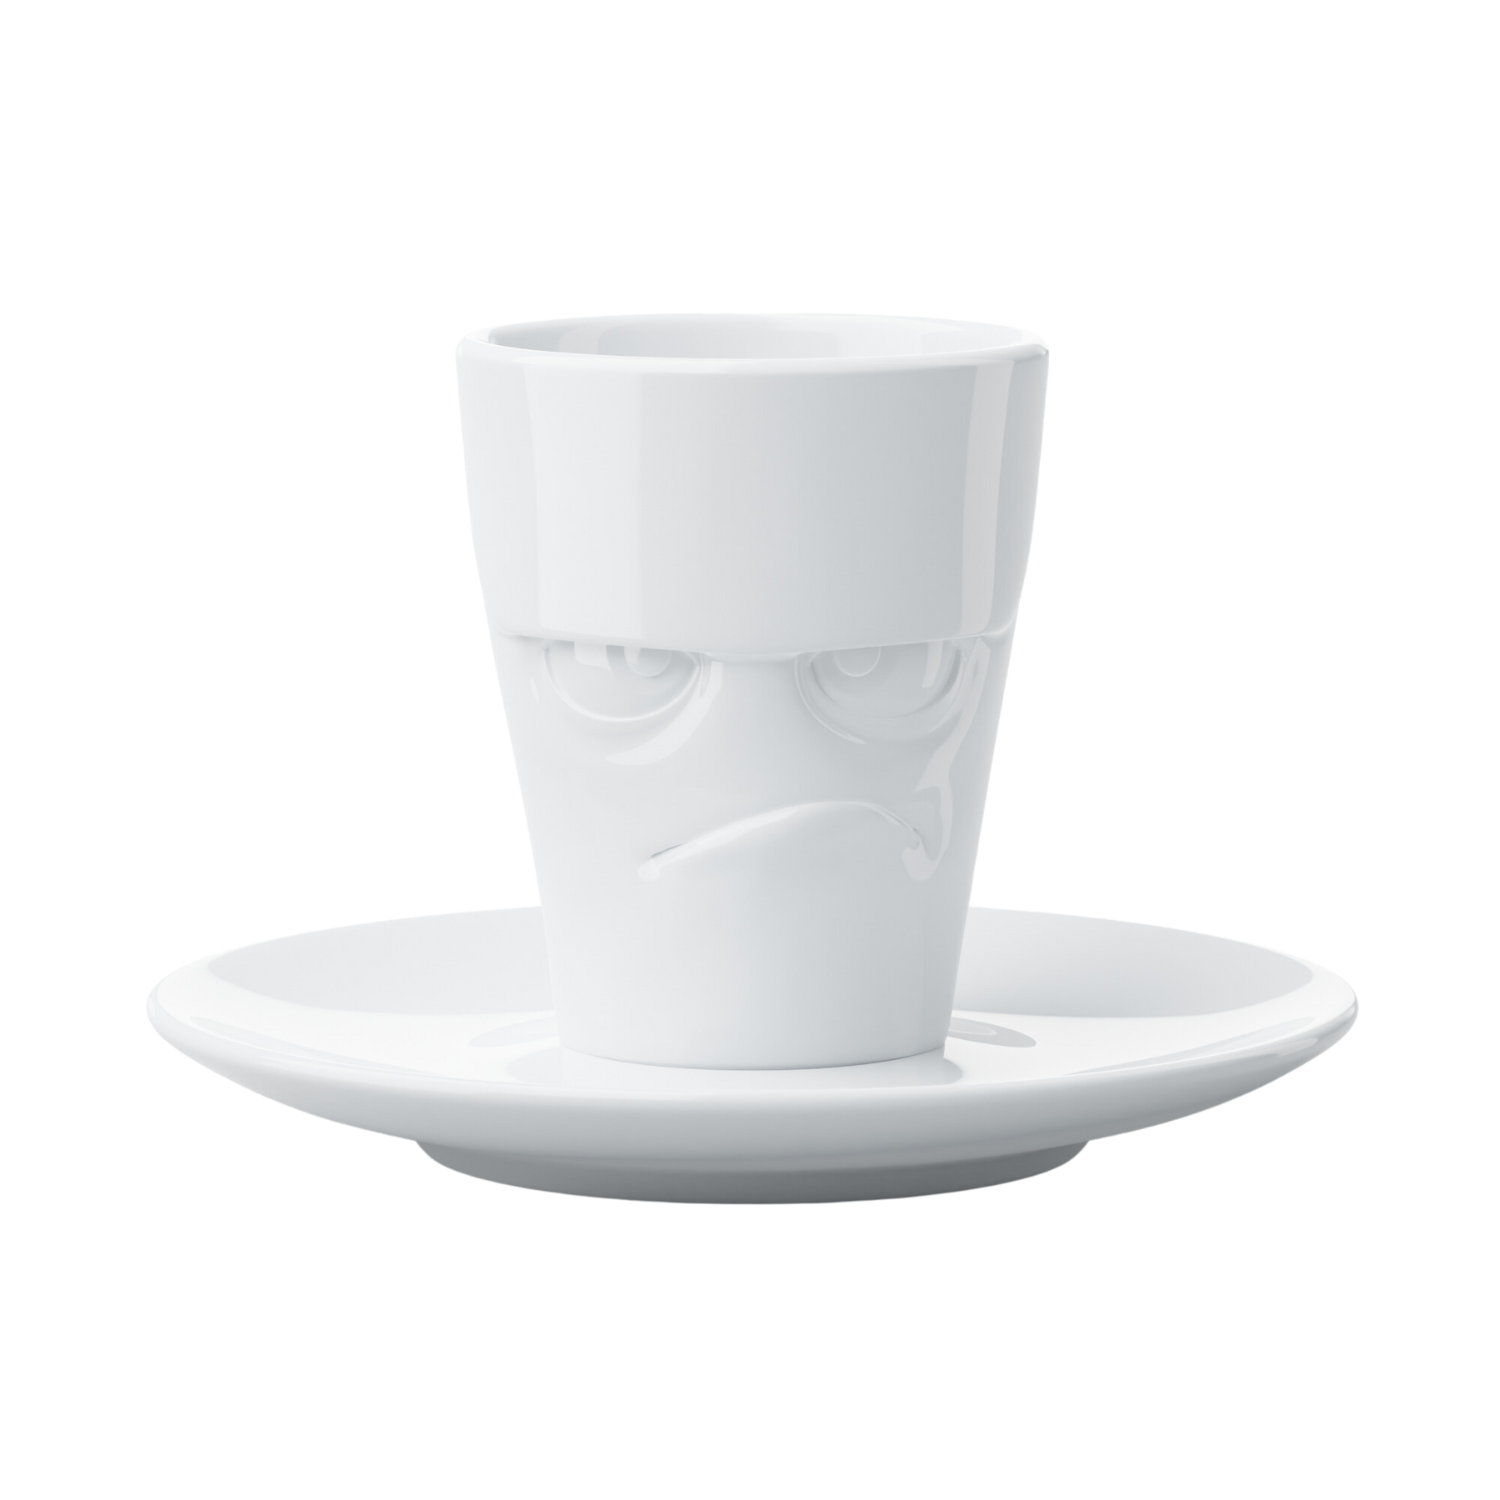 Expresso mug visage grognon tassen espresso porcelaine